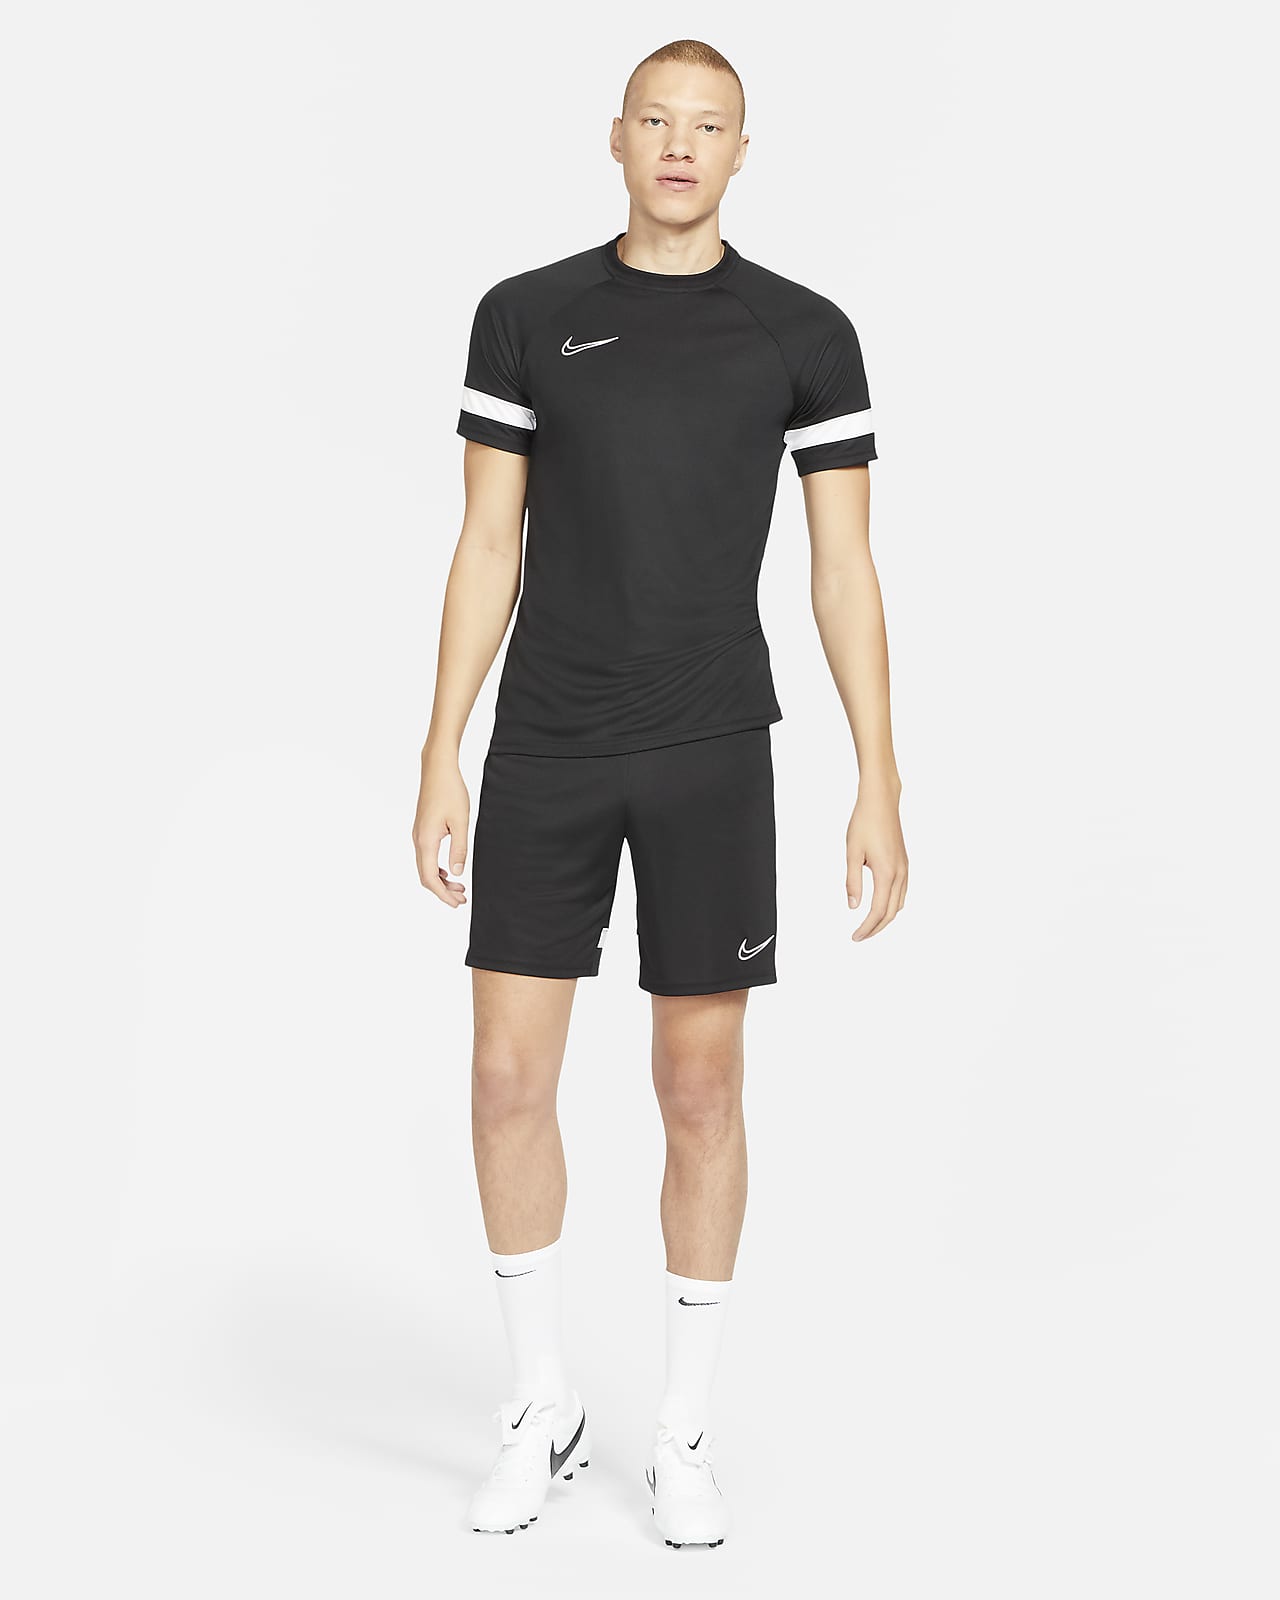 Nike Men\'s Nike Football Short-Sleeve Dri-FIT Top. Academy ID